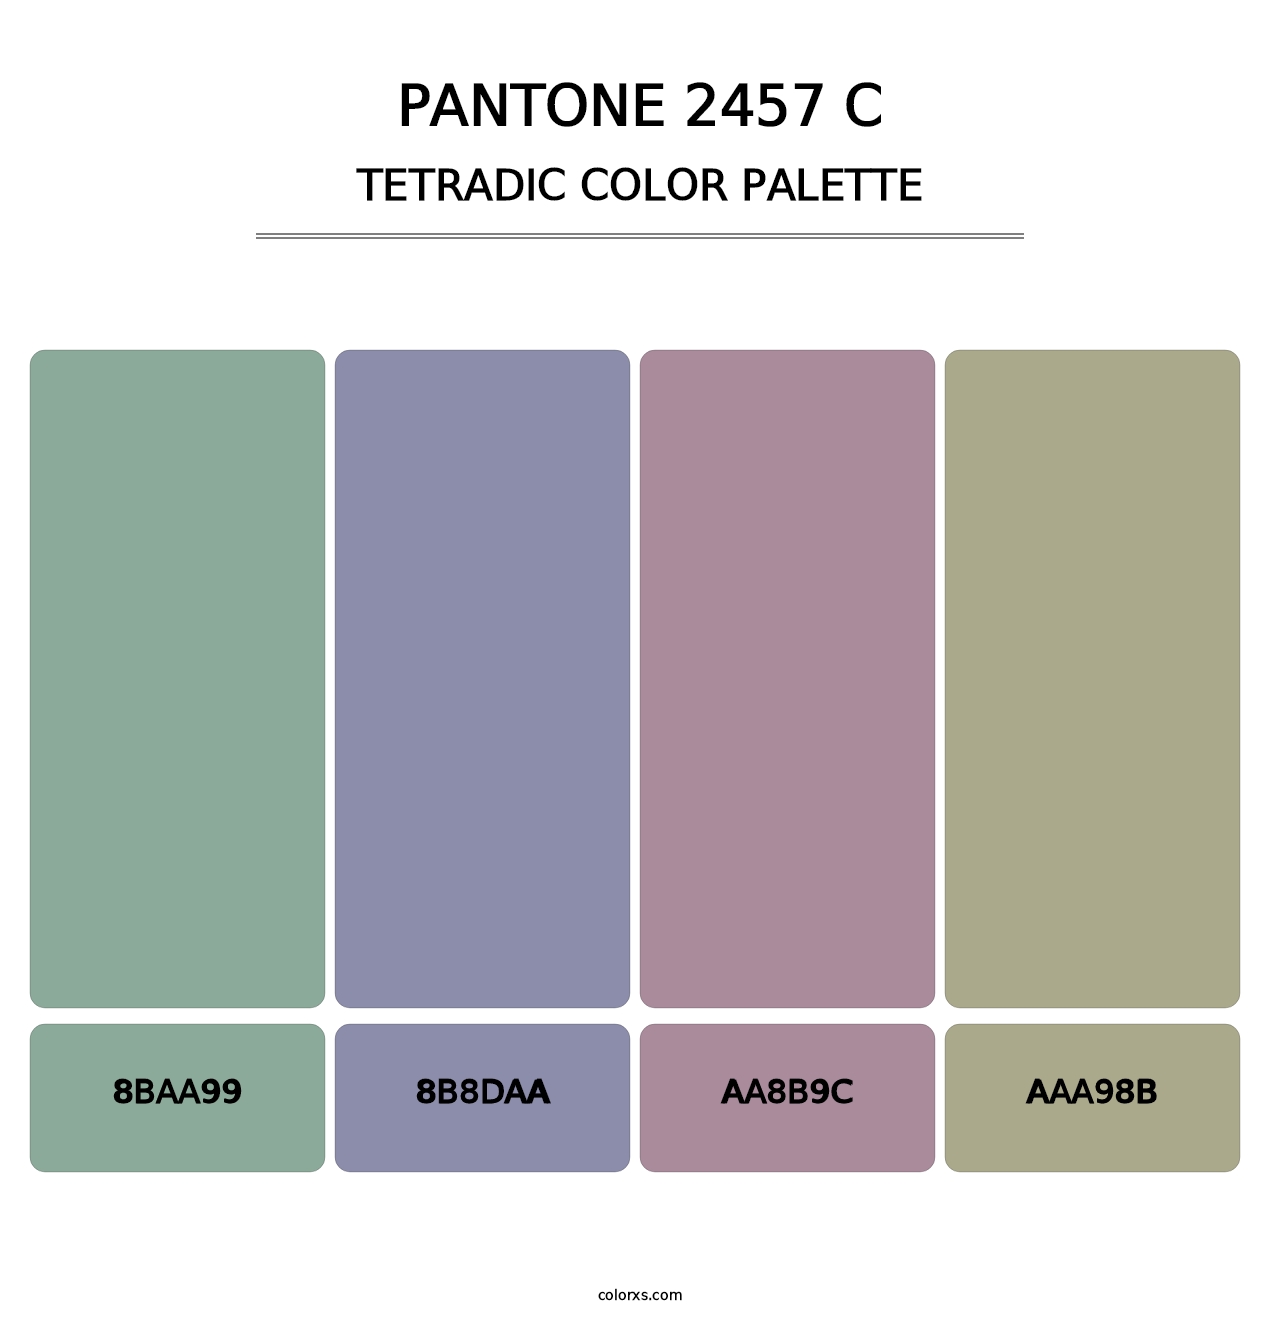 PANTONE 2457 C - Tetradic Color Palette